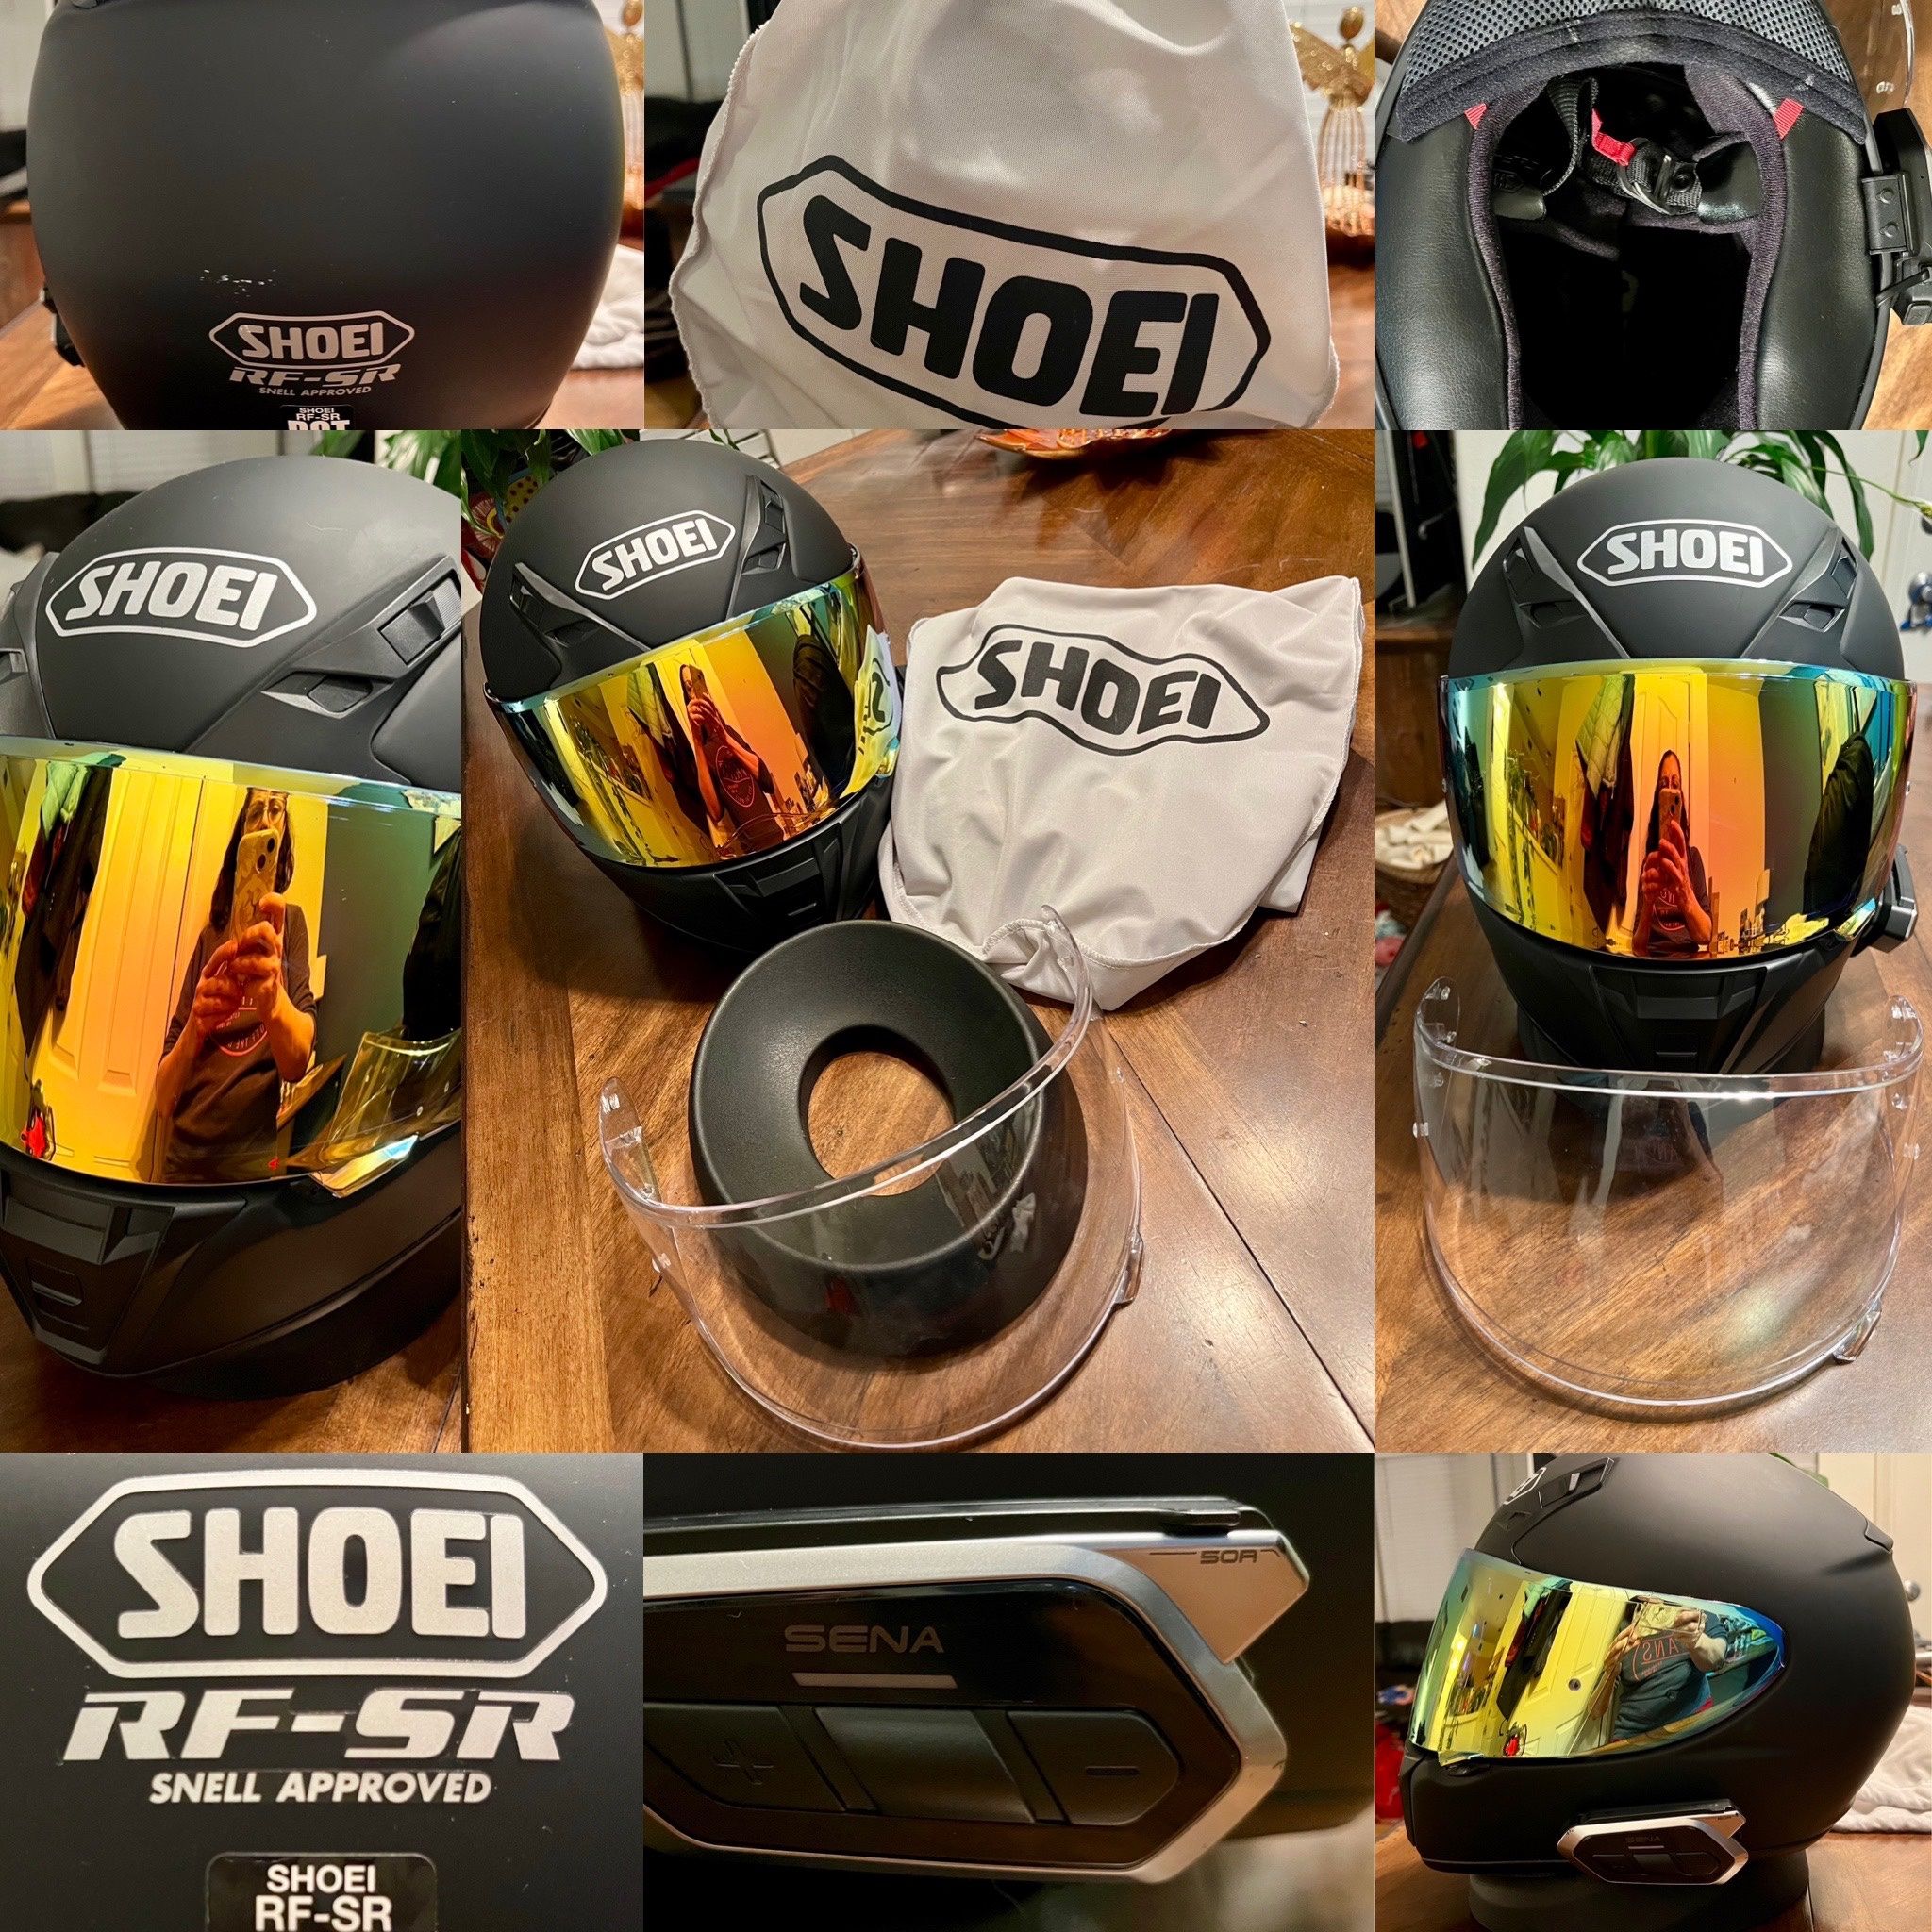 SHOEI RF-SR Motorcycle Helmet w/ SENA 50R Harman Kardon BT Headset, Special Visor & More - Size M